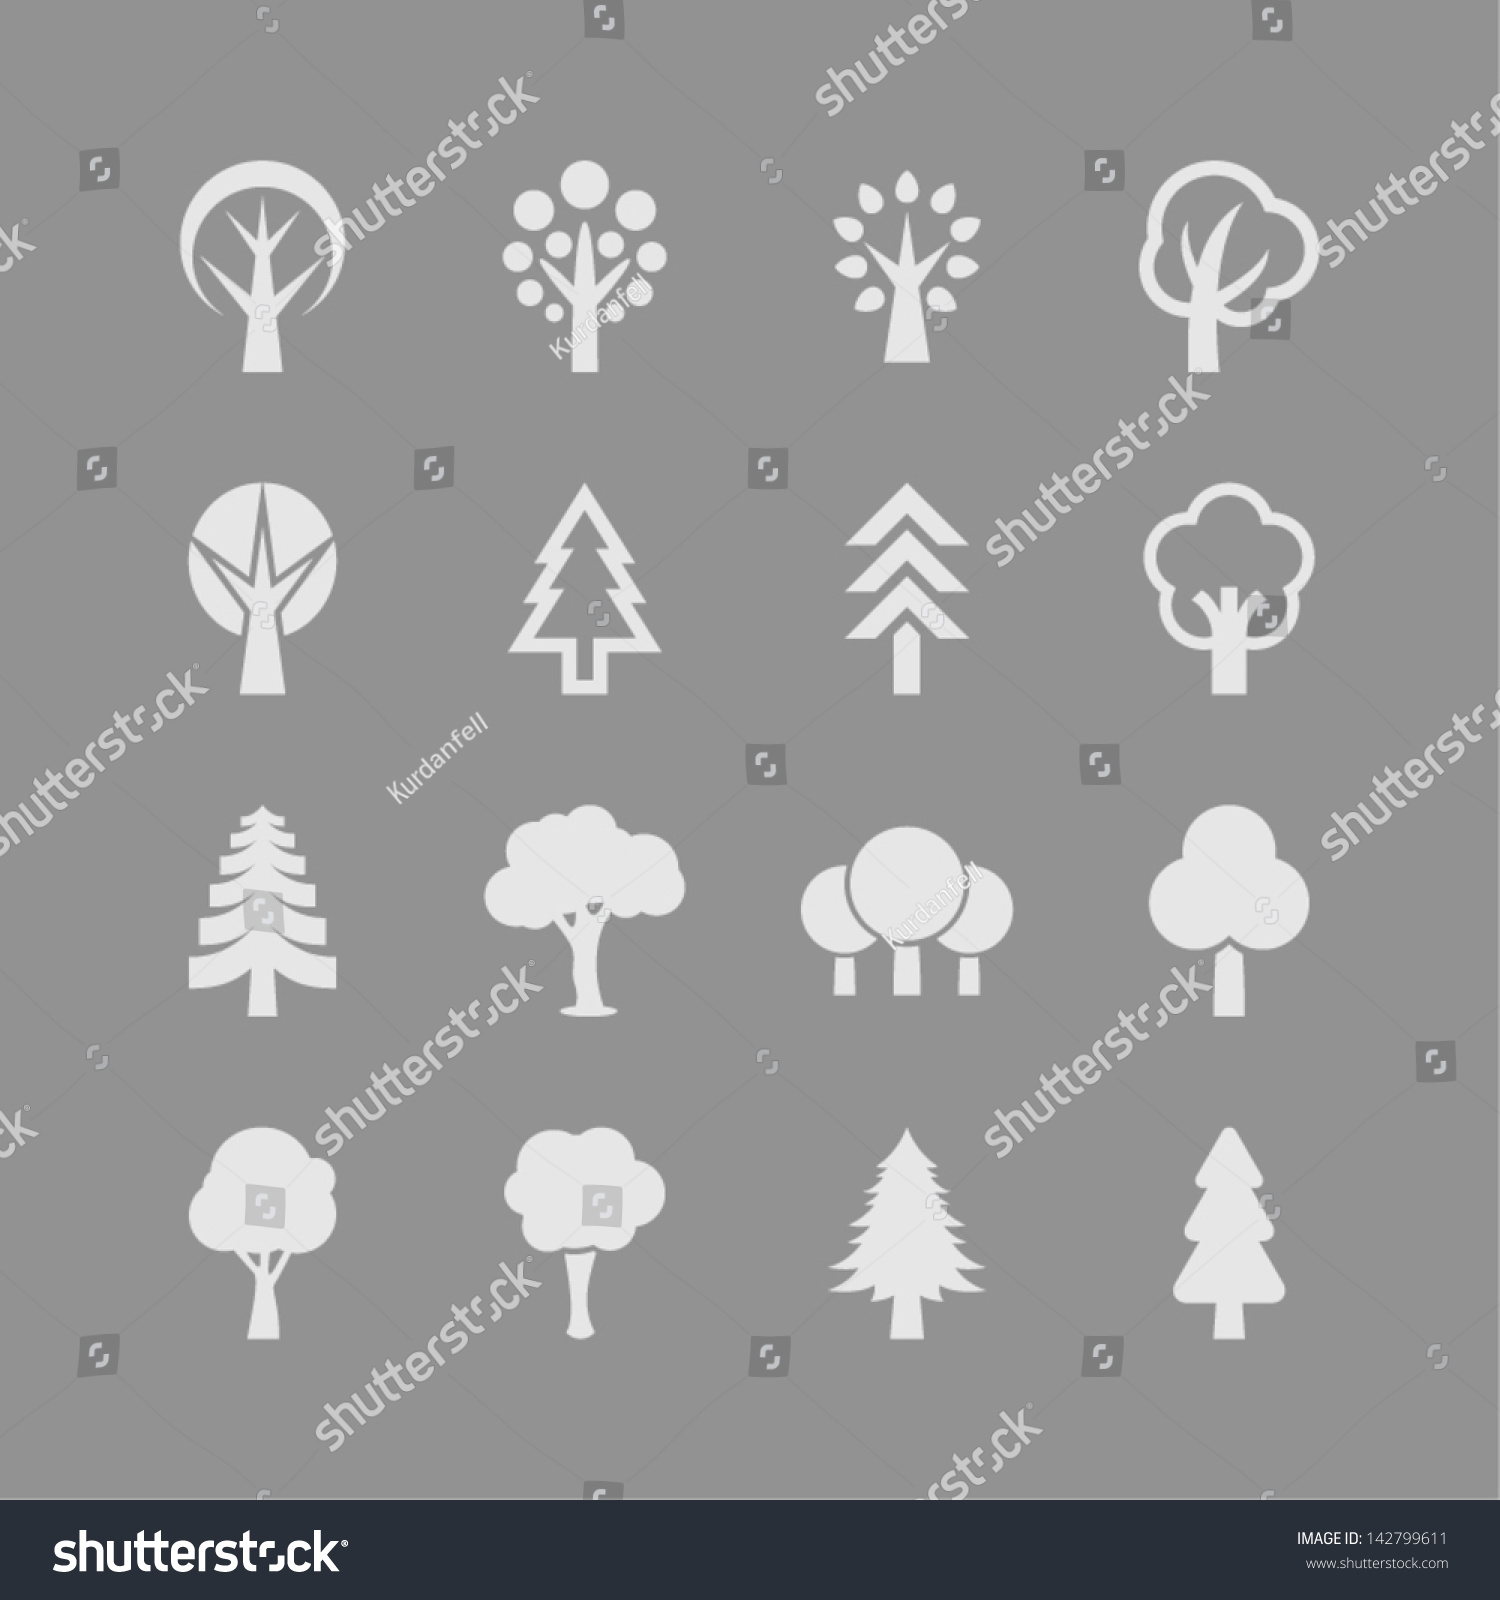 Natural tree icon set #142799611